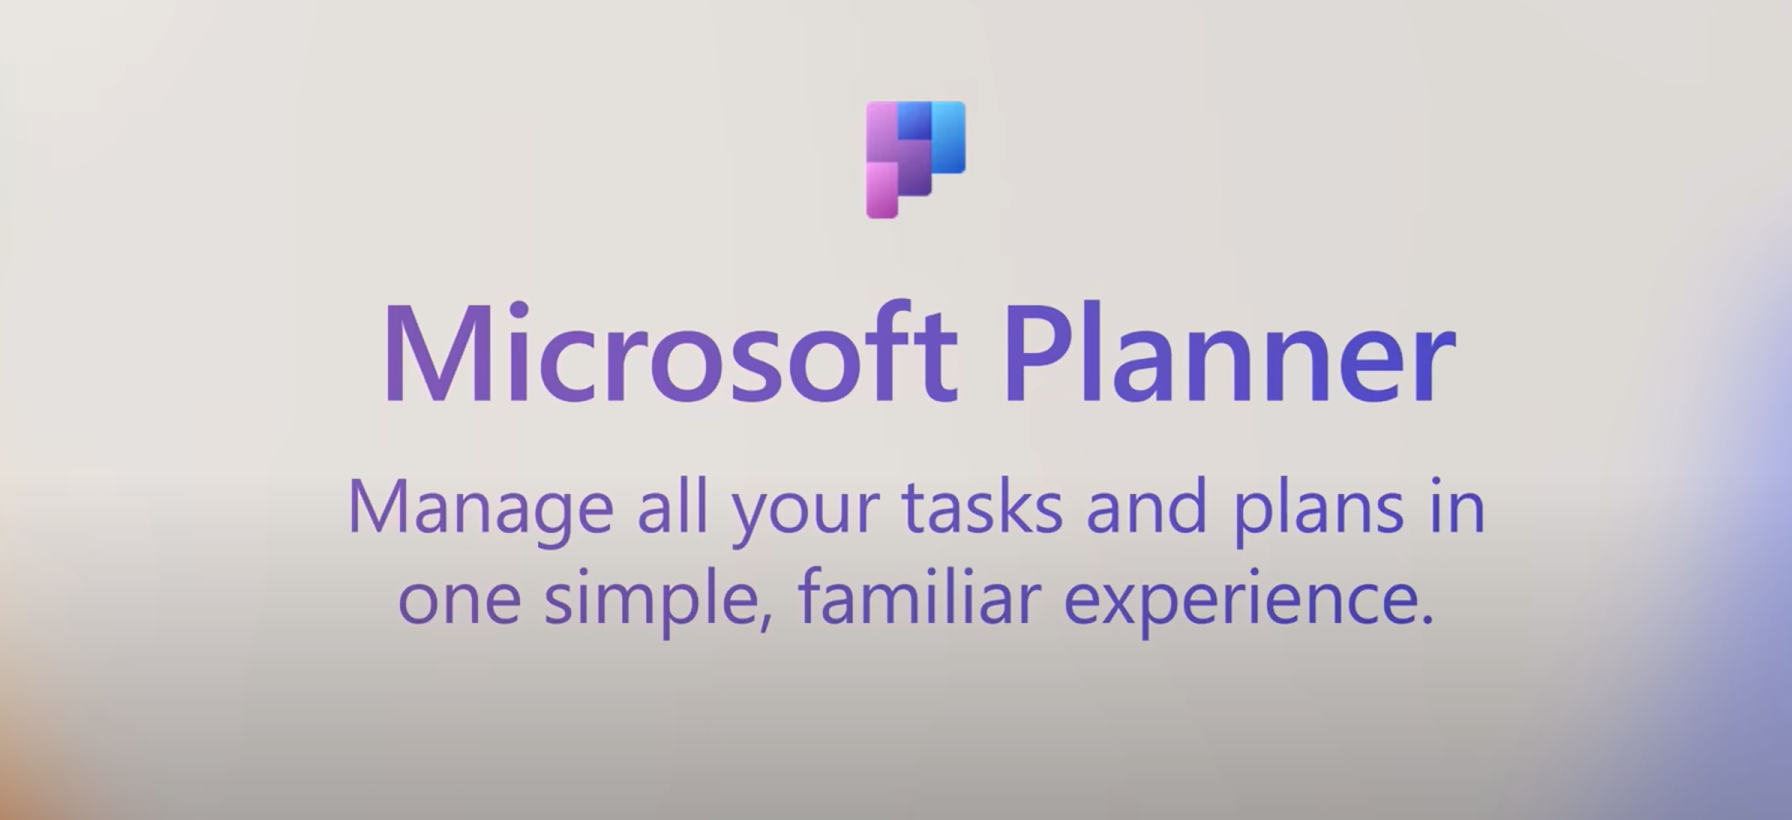 Meet the New Microsoft Planner